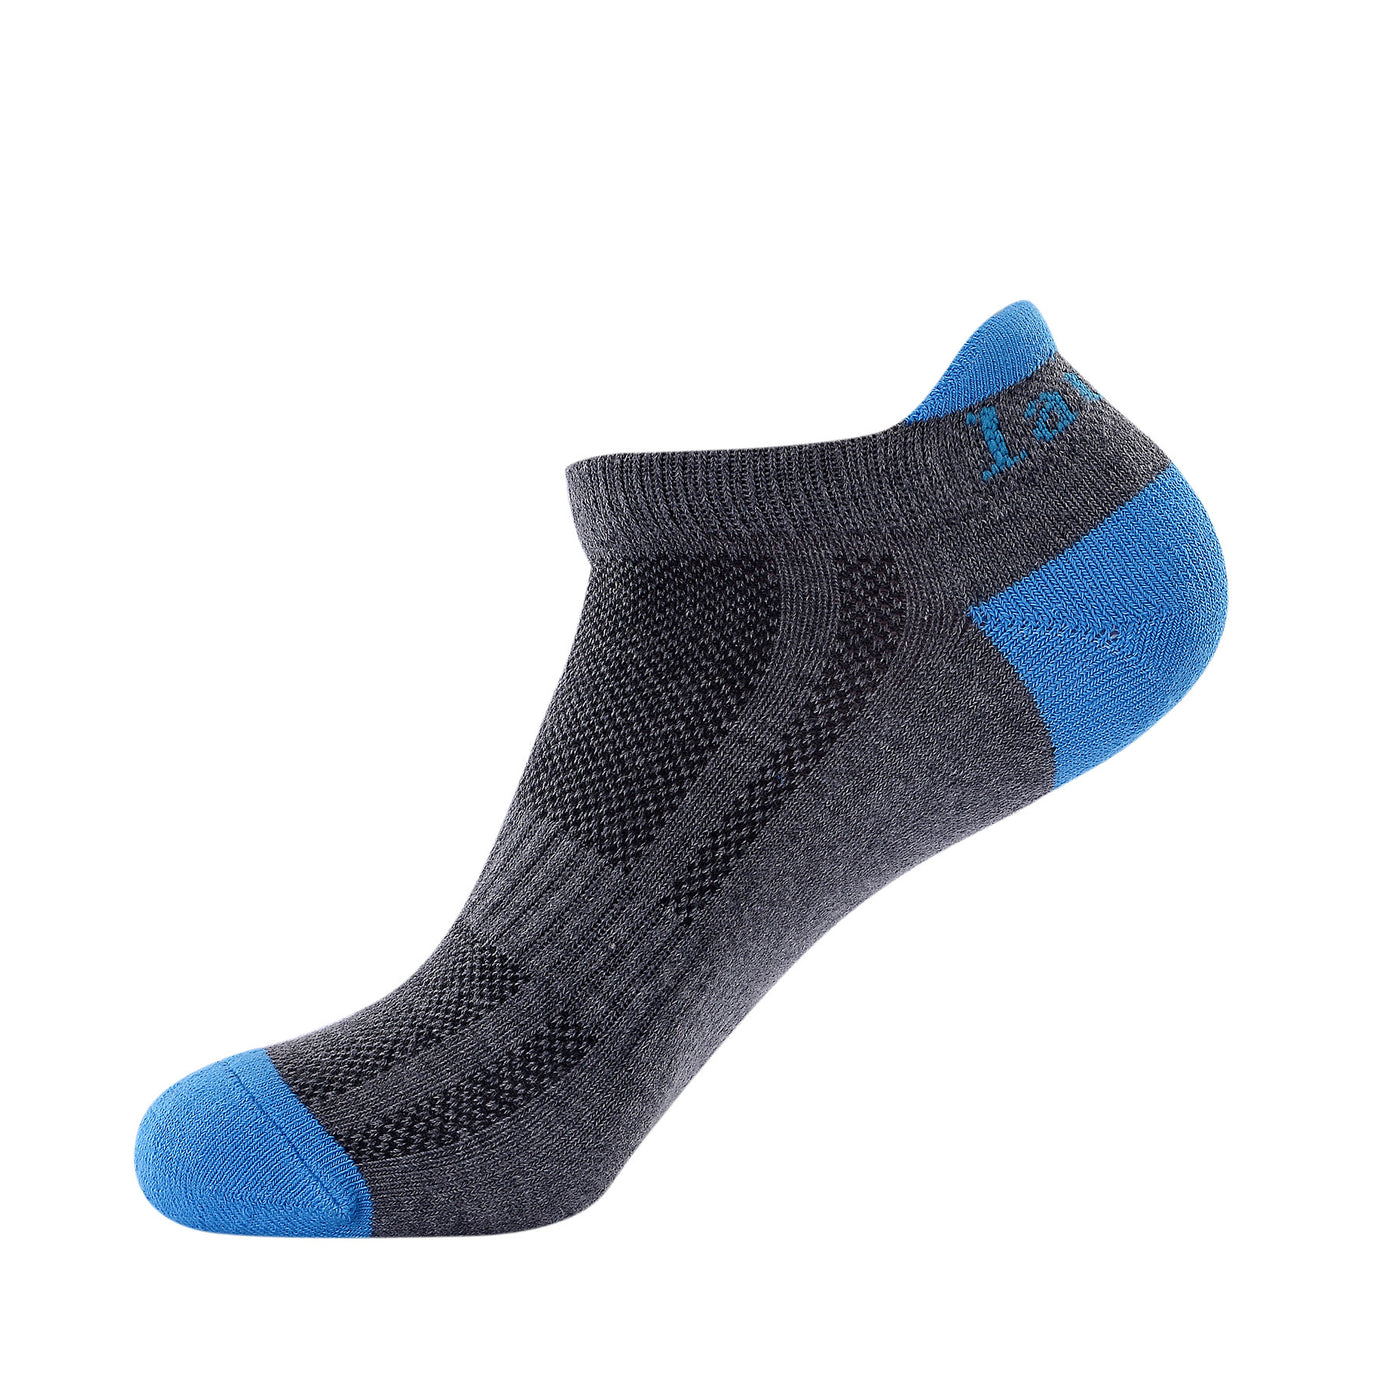 Laulax 4 pairs Ladies Professional Coolmax Running Socks, Achilles Tendon Protection, Size UK 3 - 8 / Europe 36 - 42, Gift Set